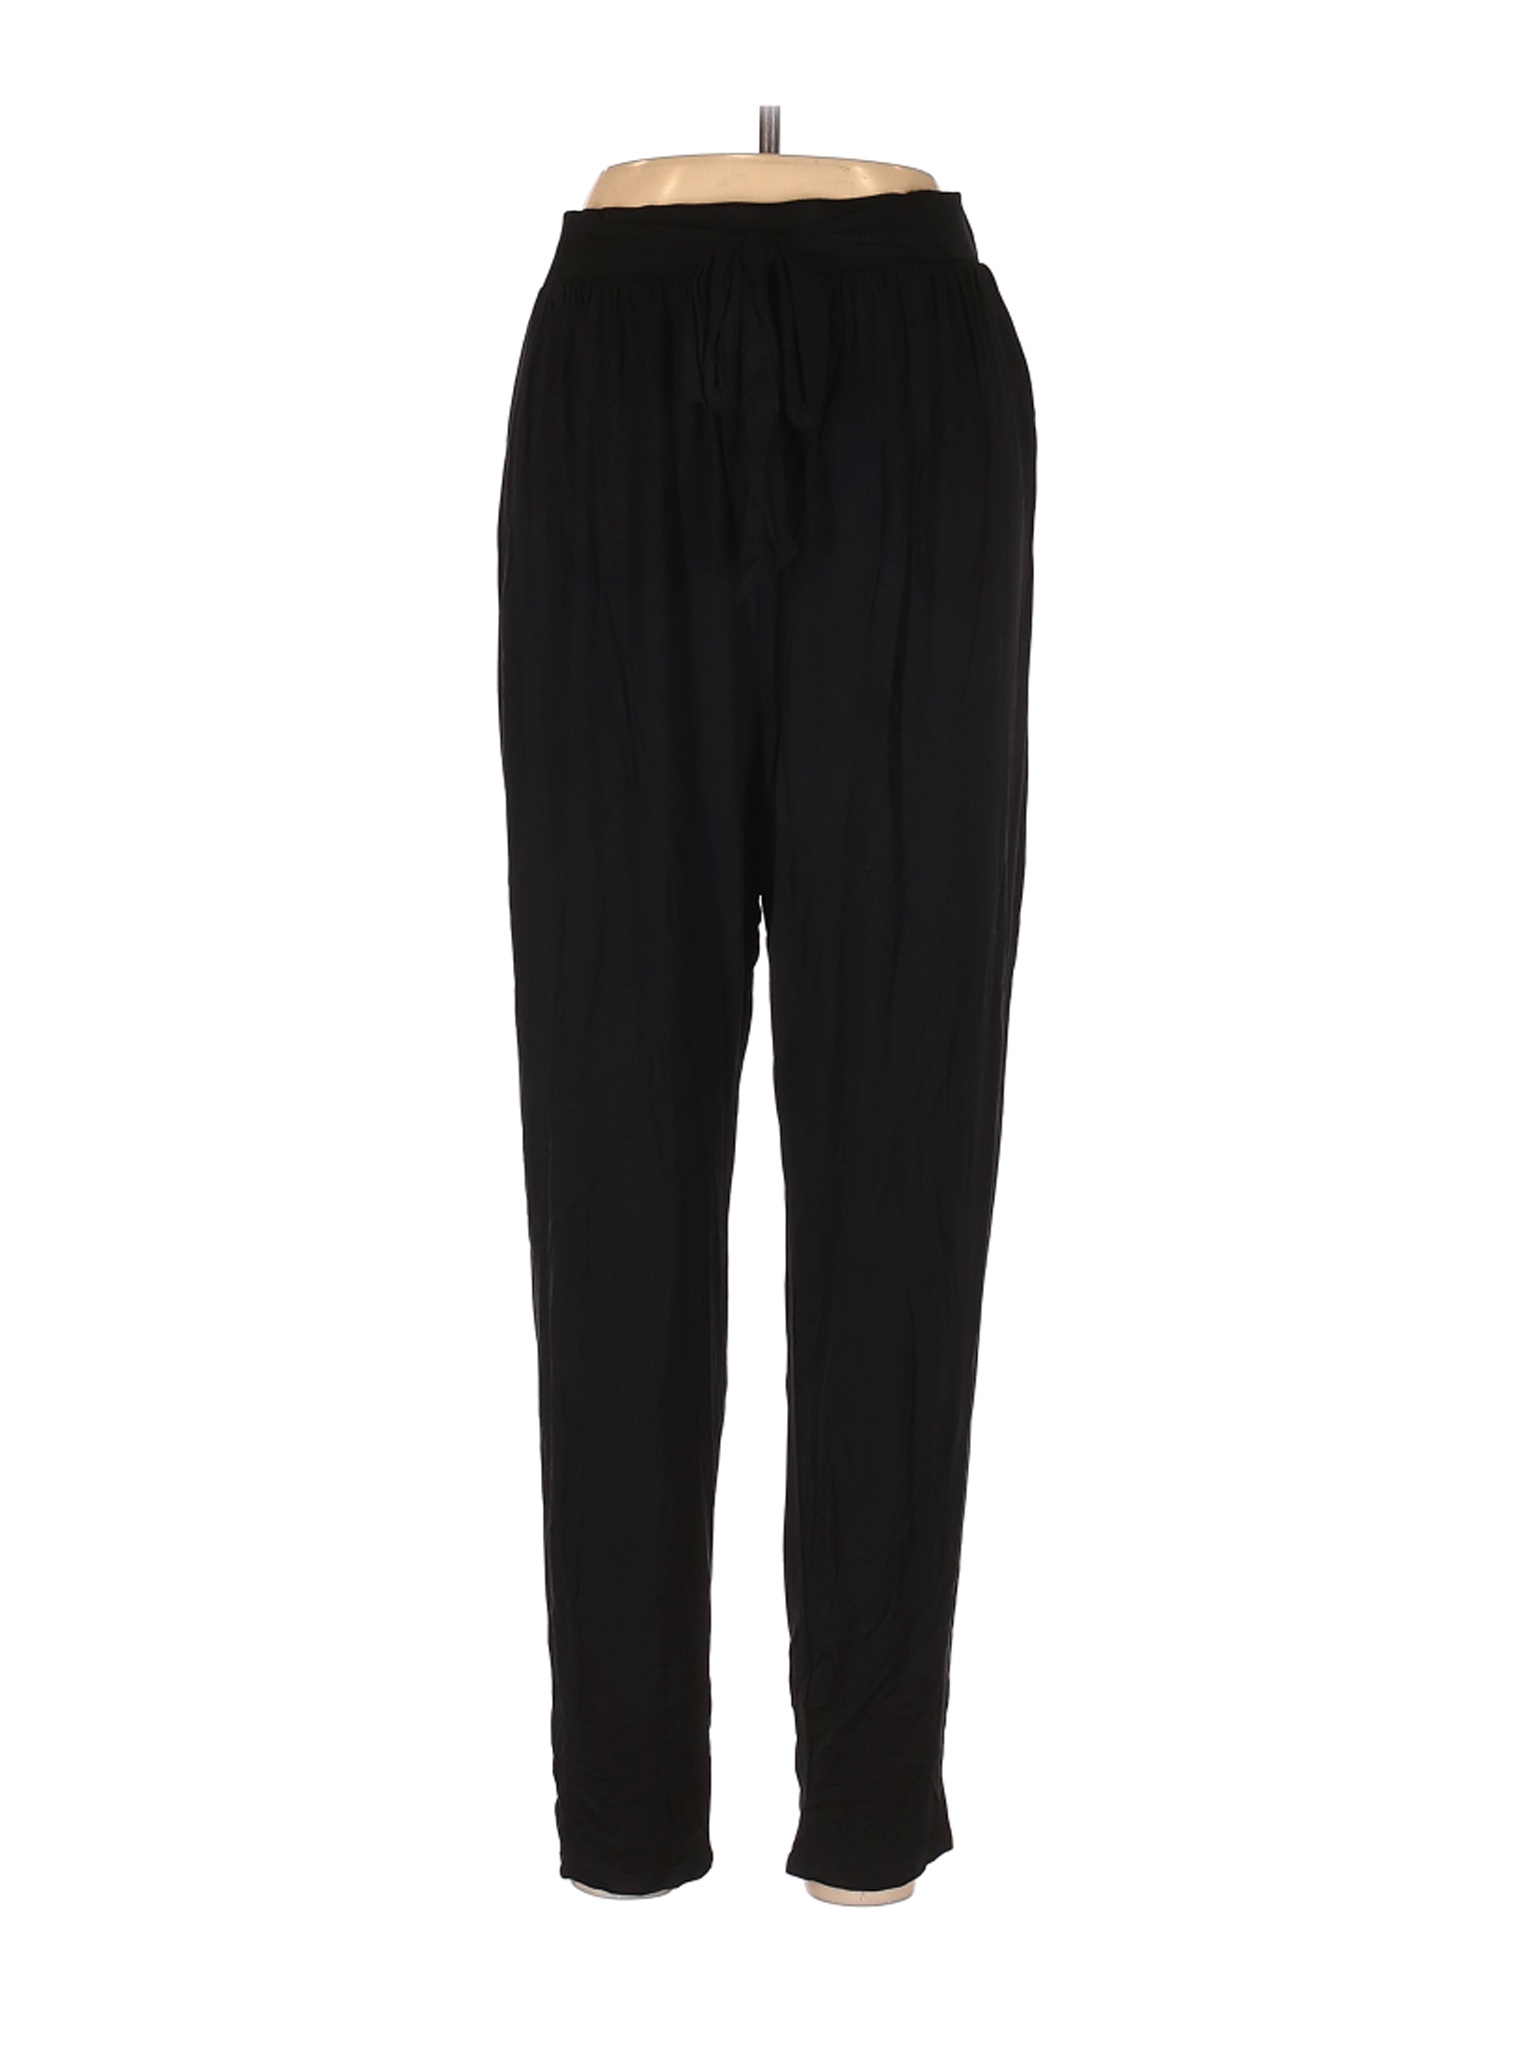 Easel Women Black Casual Pants M | eBay